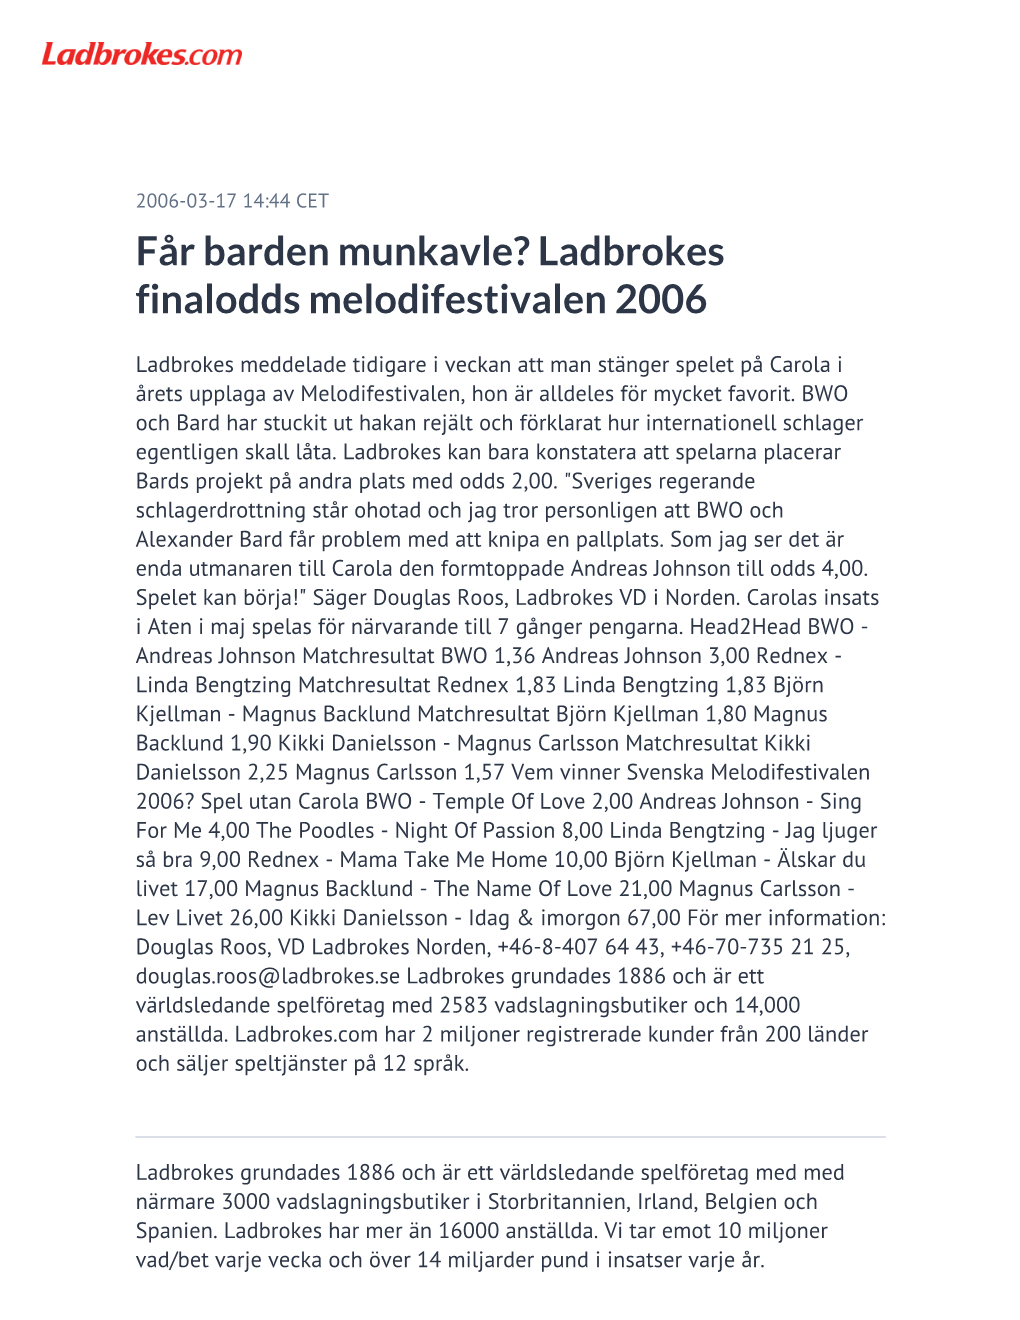 Ladbrokes Finalodds Melodifestivalen 2006